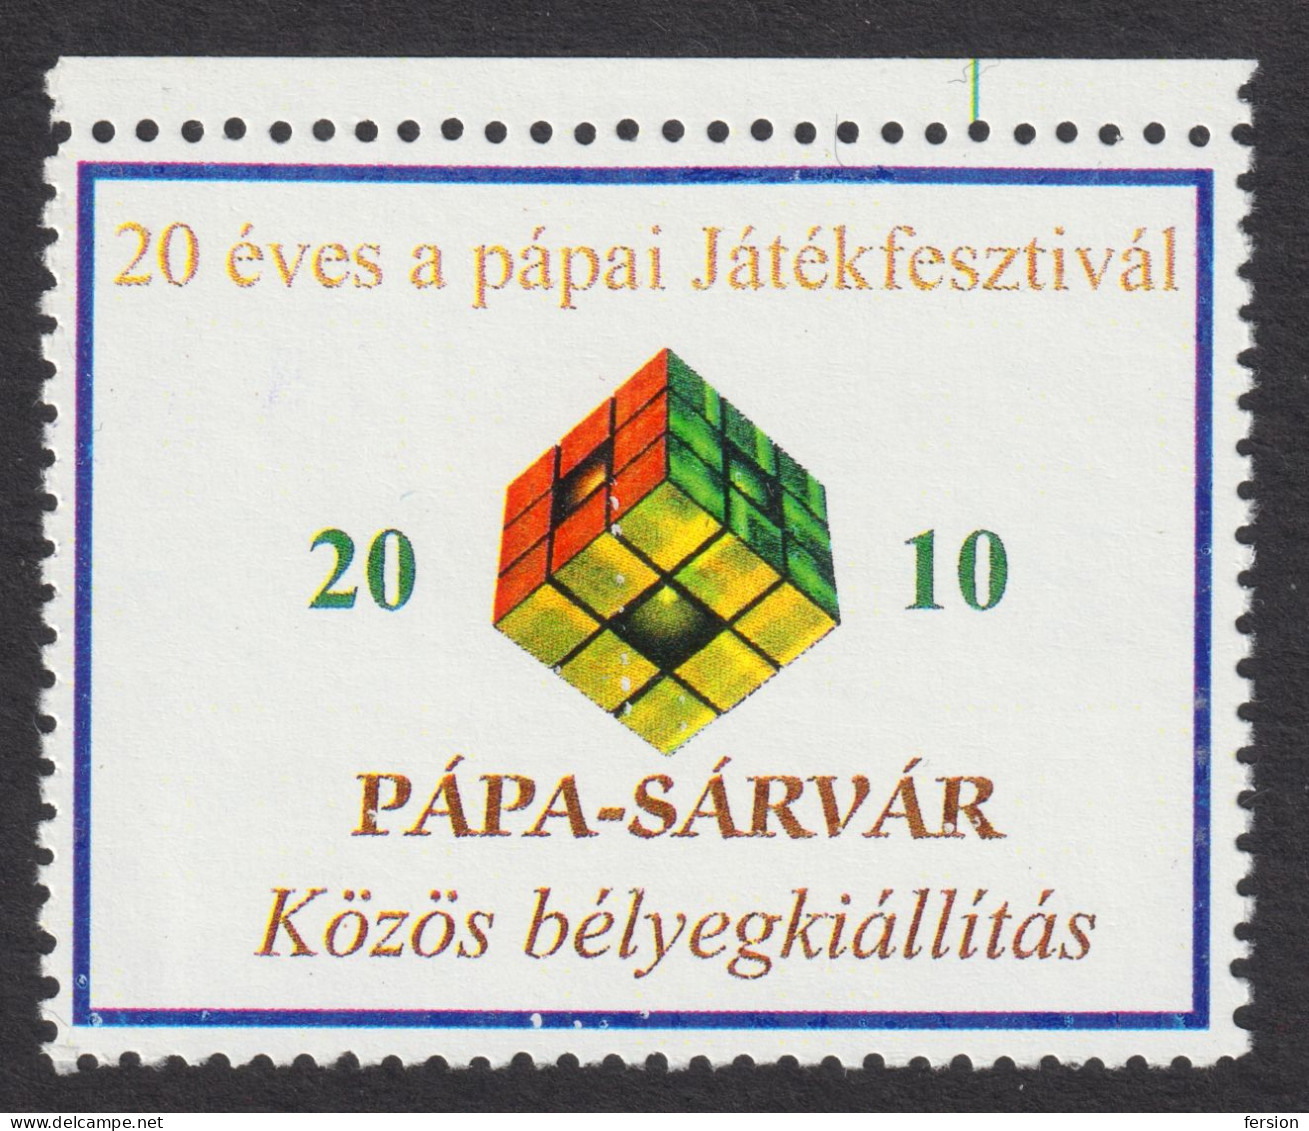 Rubik's Rubik Magic Cube TOY PLAY - Pápa / Sárvár Game Festival - LABEL CINDERELLA VIGNETTE Hungary - Unclassified